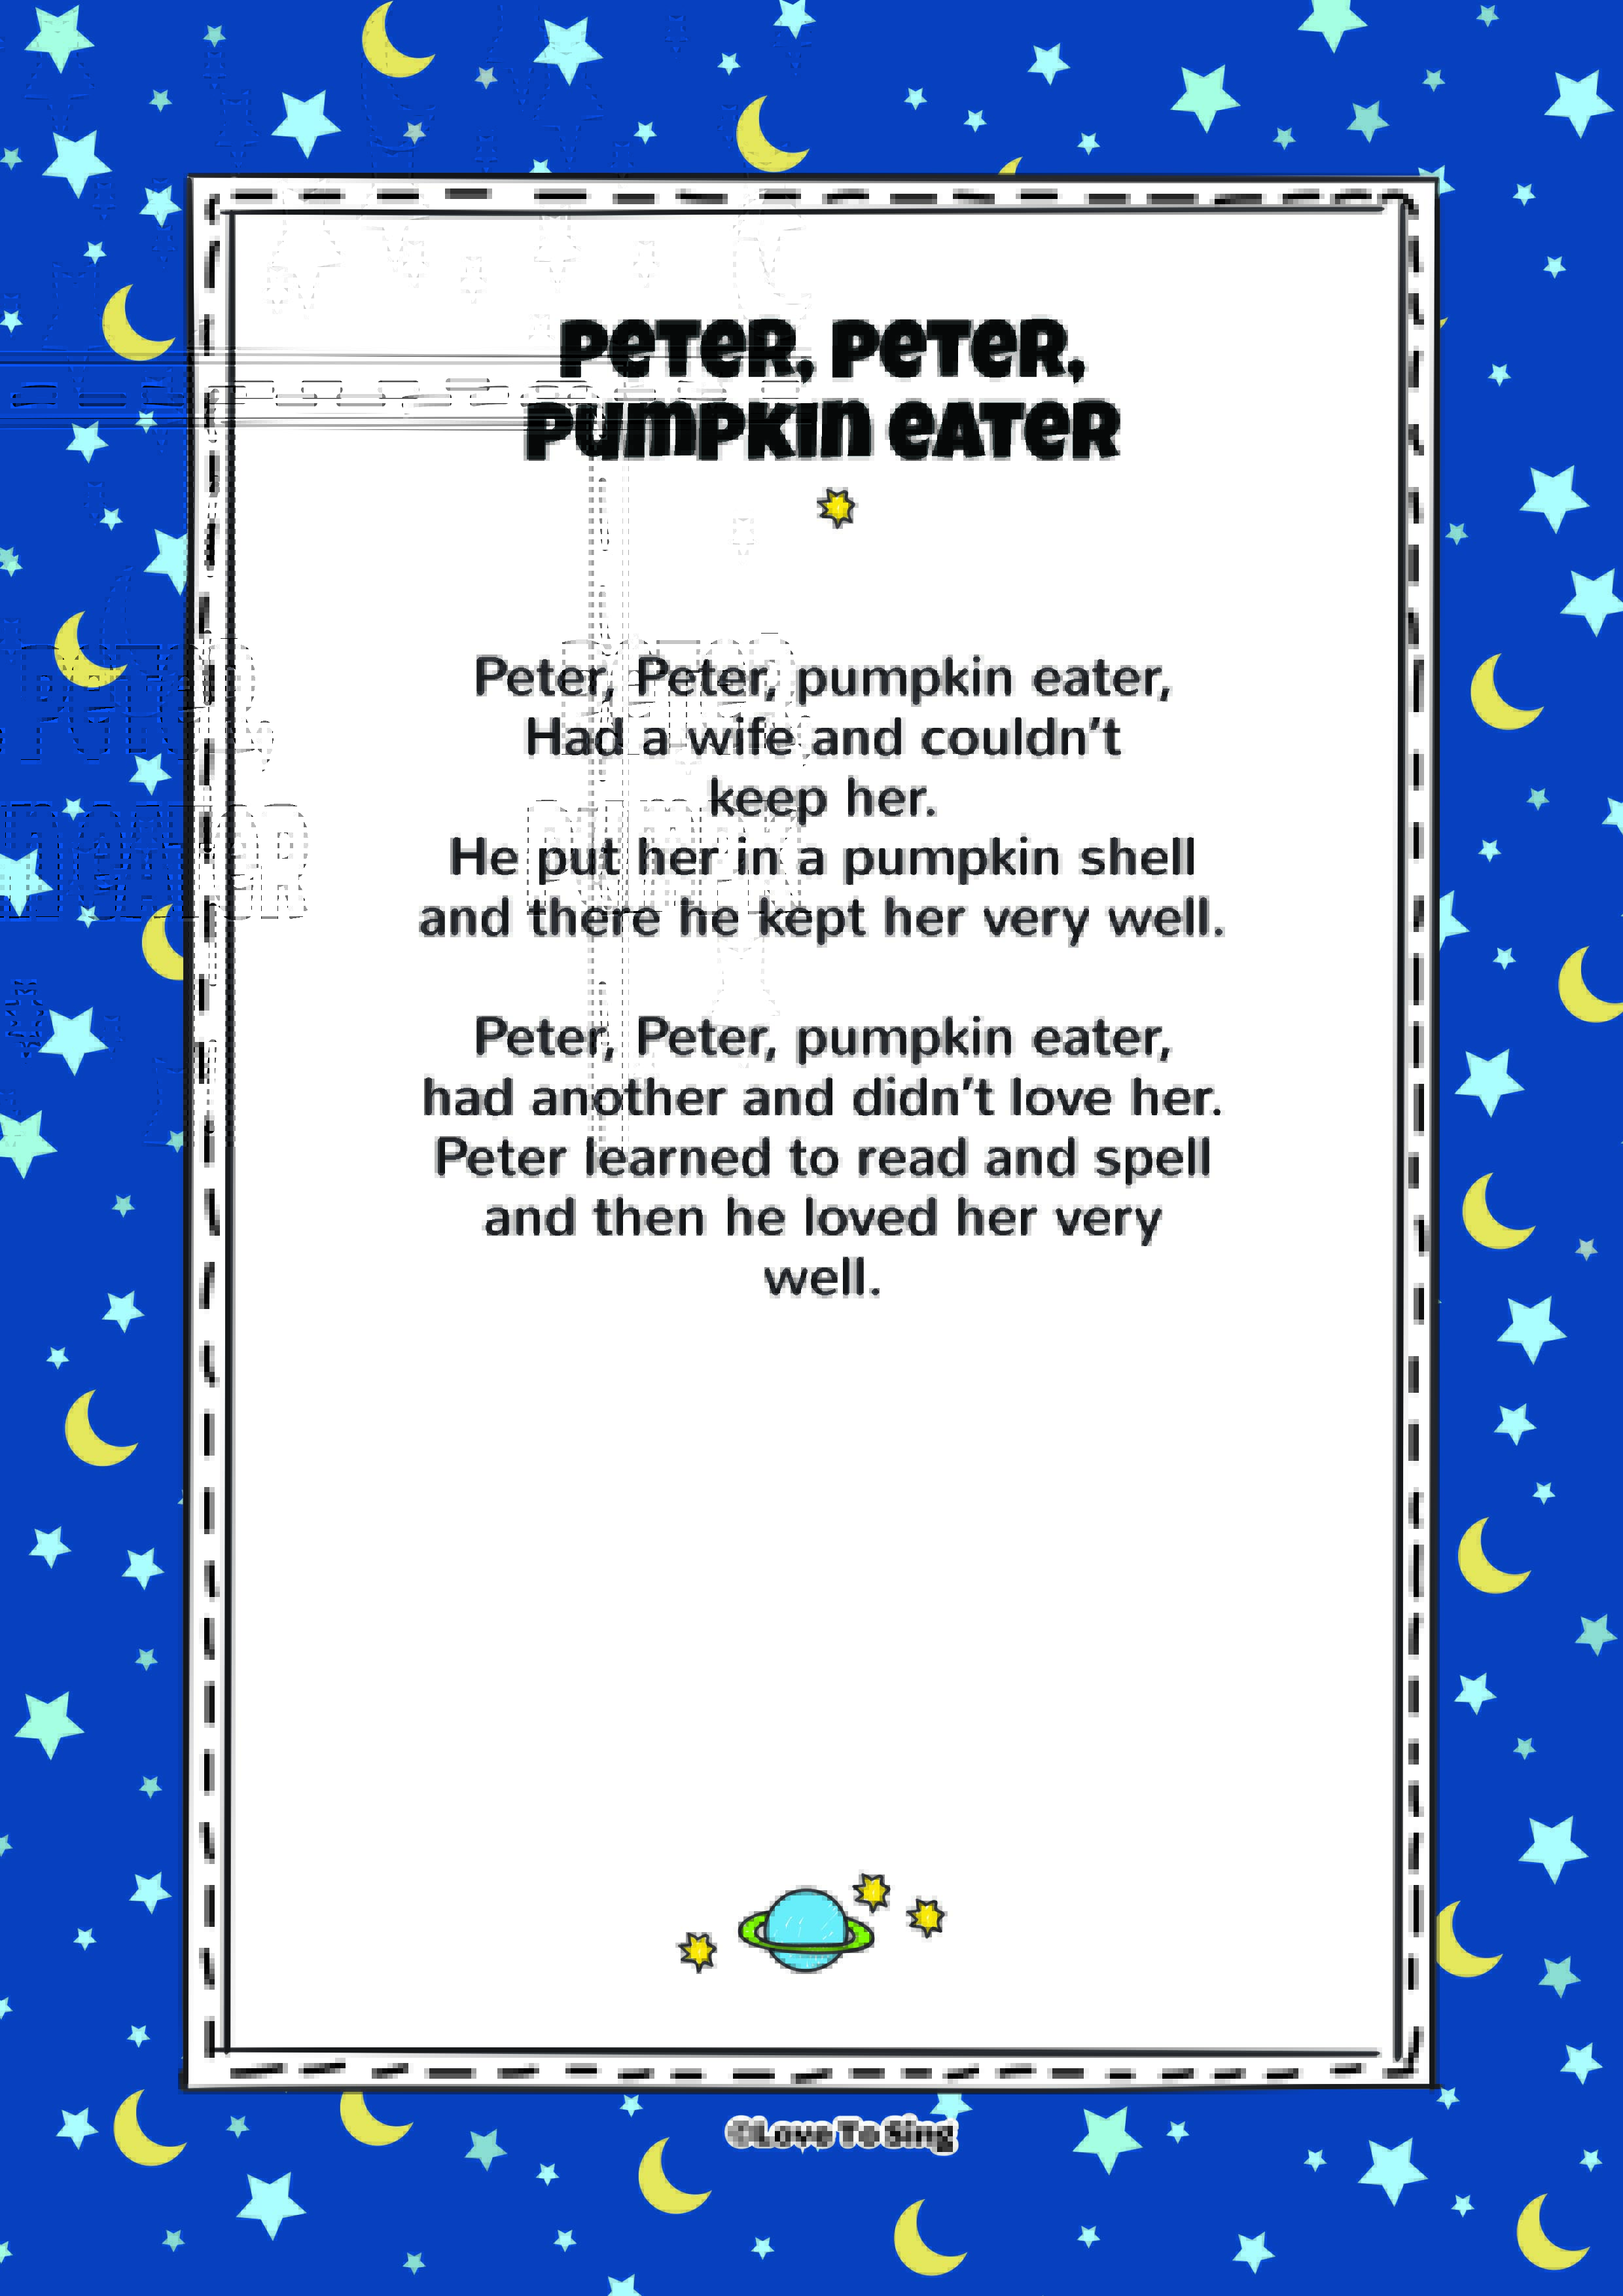 Peter Peter Pumkin Eater Kids Video Song with FREE Lyrics & Activities!